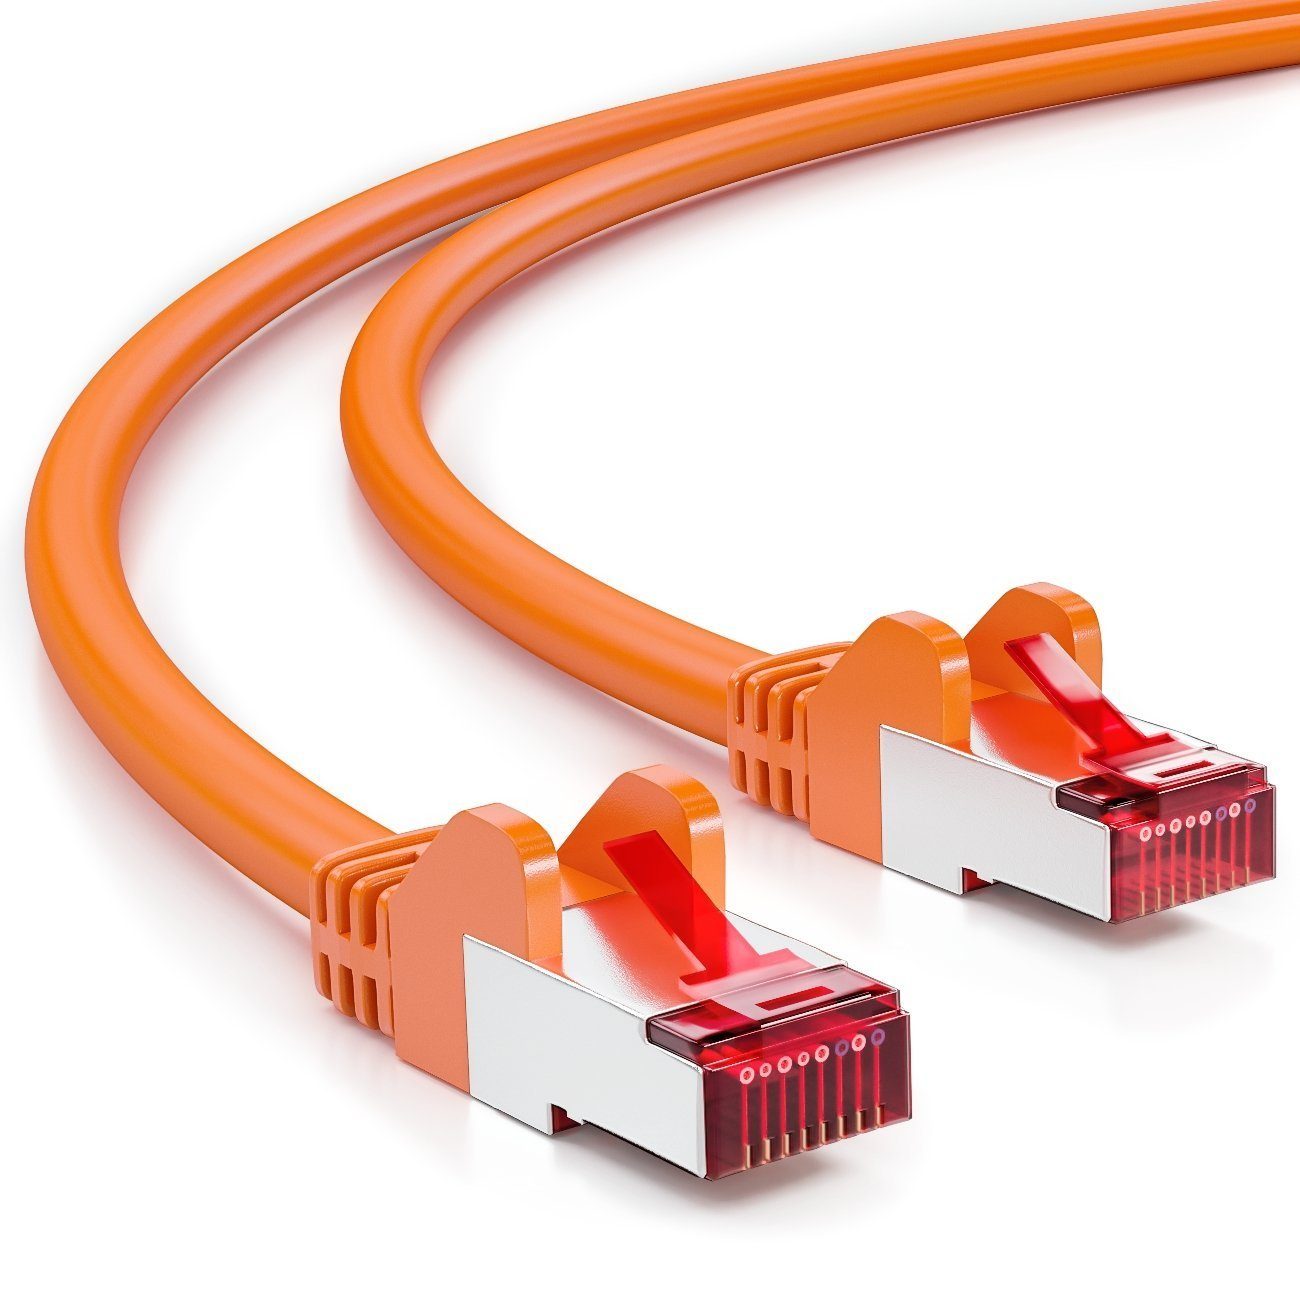 deleyCON »deleyCON 3m CAT6 Patchkabel S-FTP PIMF Netzwerkkabel  Ethernetkabel - Orange« LAN-Kabel online kaufen | OTTO